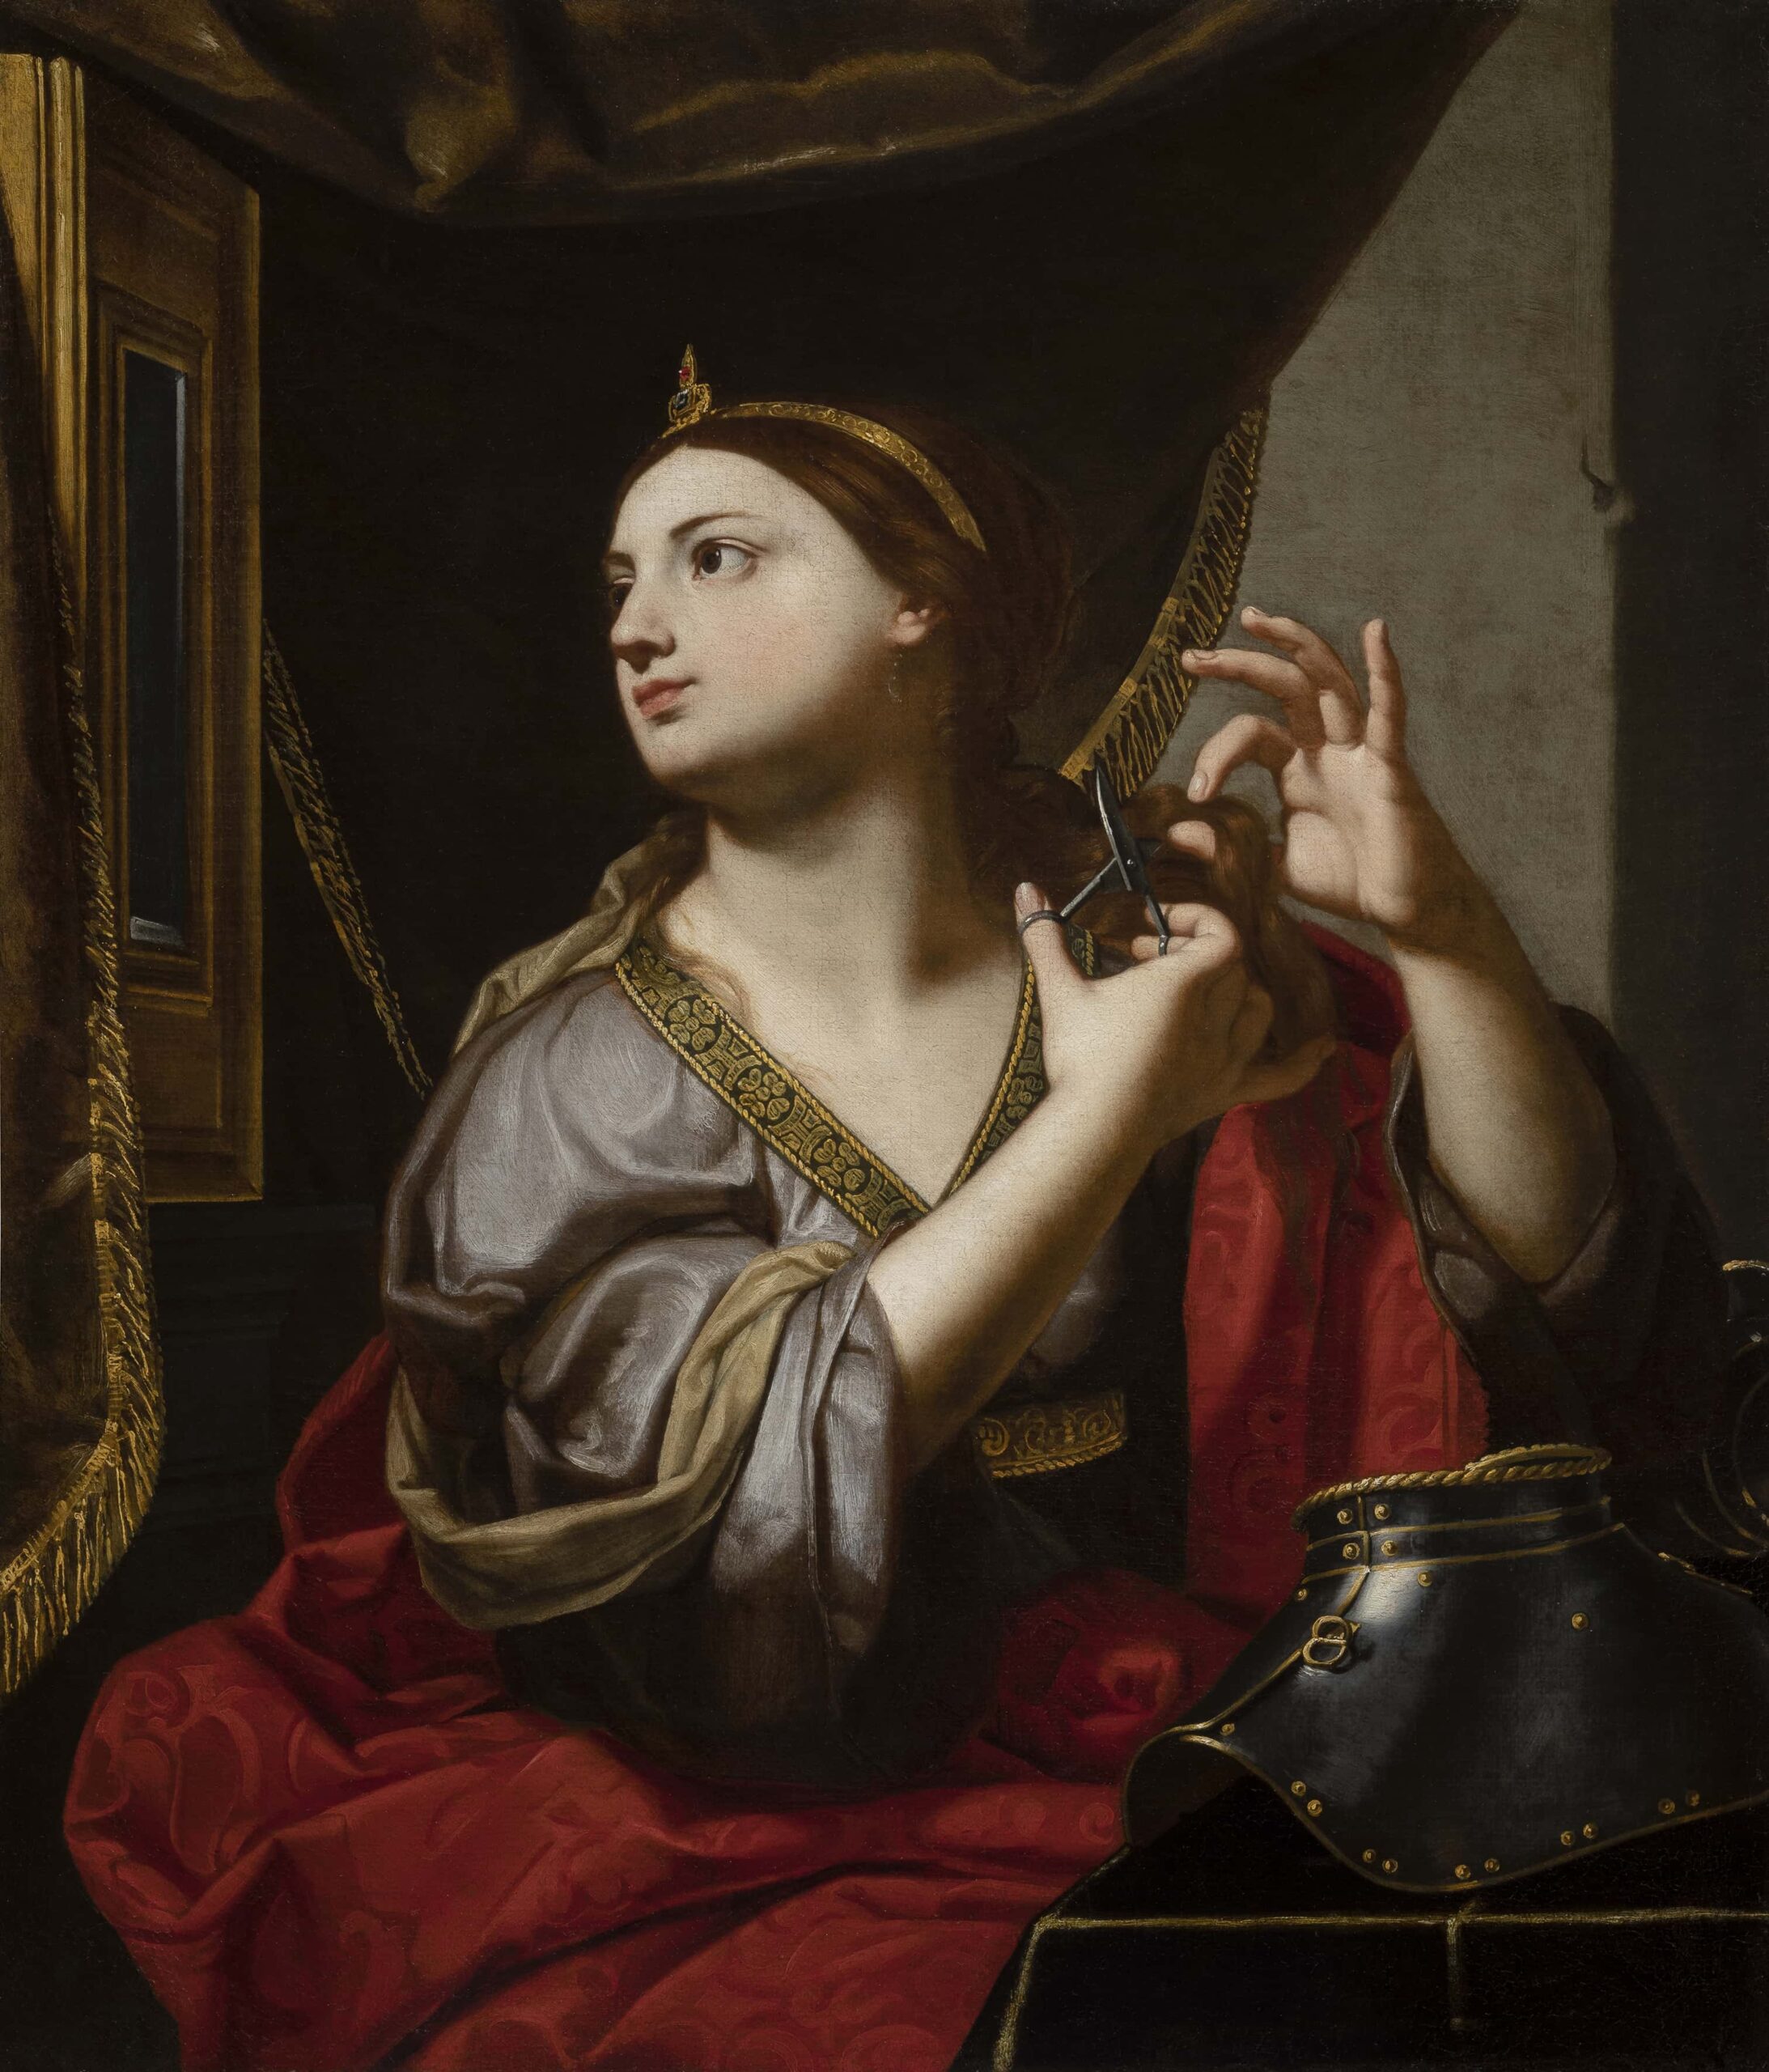 London Art Week - Michele Desubleo (1602-1676), "Berenice," Maubeuge, Parma, 1660 c., Oil on canvas, 99.5 × 84.5 cm. (39 ⅓ × 33 ¼ in.), Maurizio Nobile Fine Art